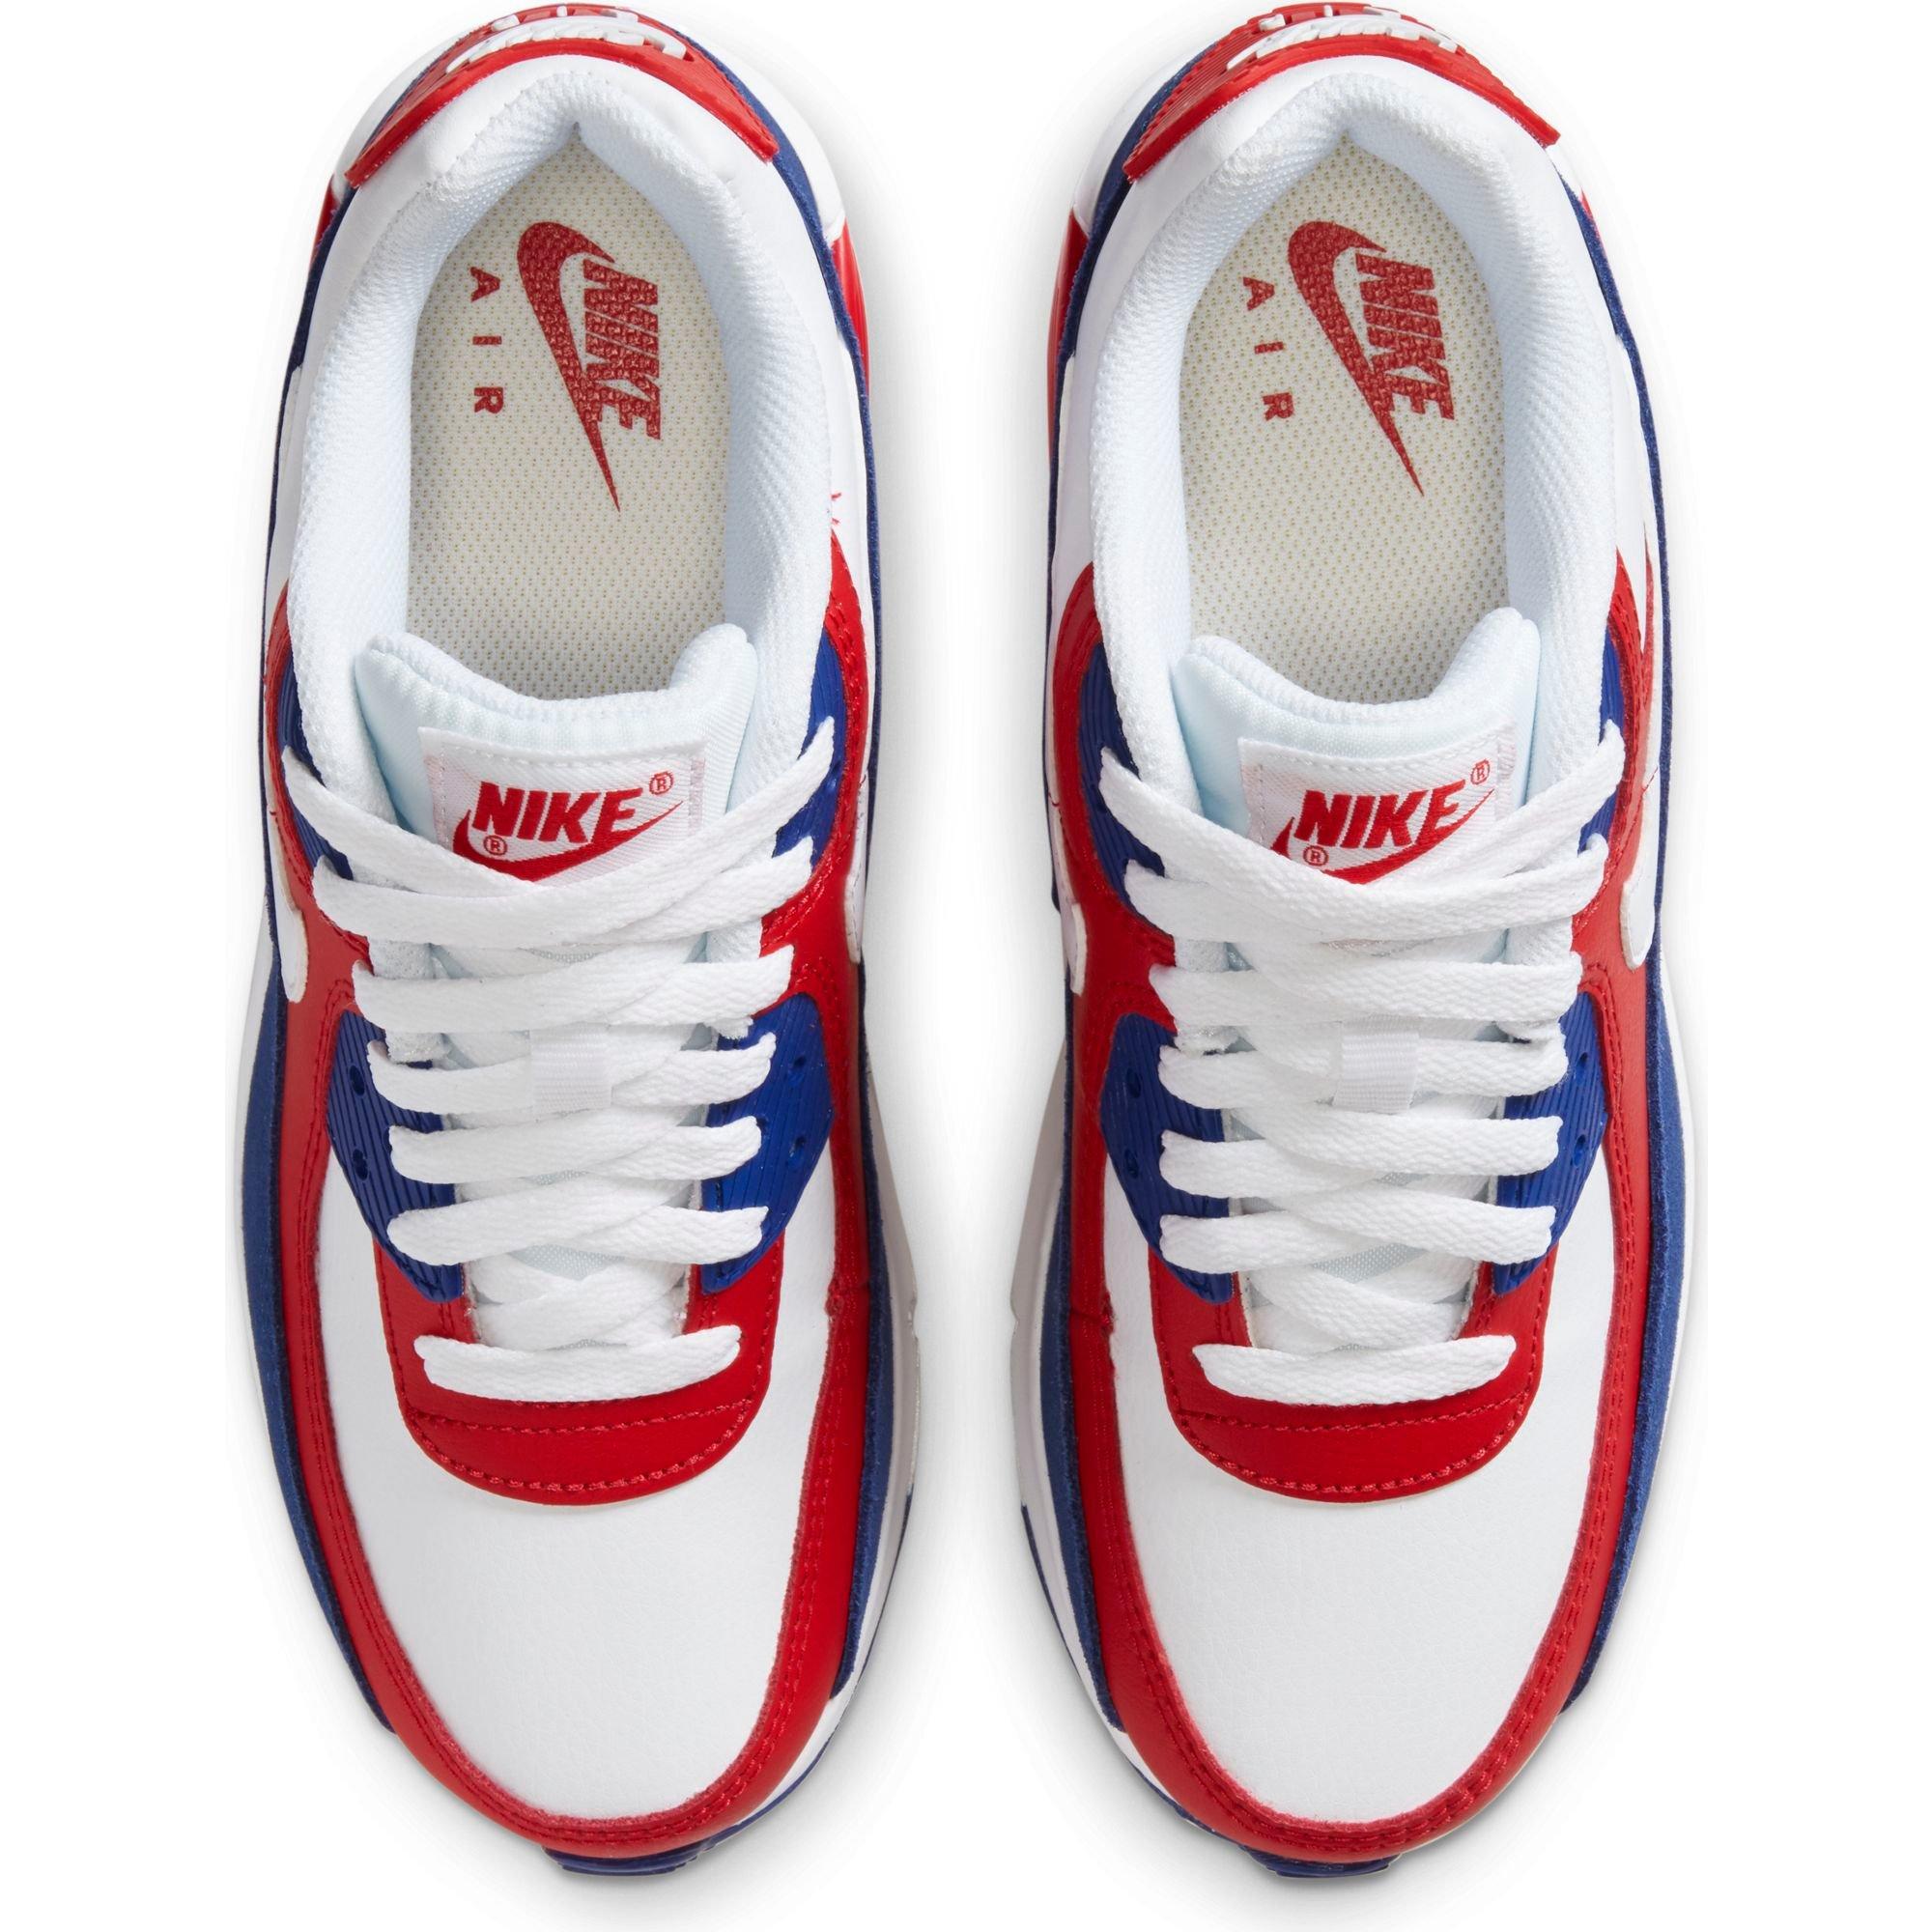 Nike Air Max 90 "Red/White/Blue" Boys' Shoe